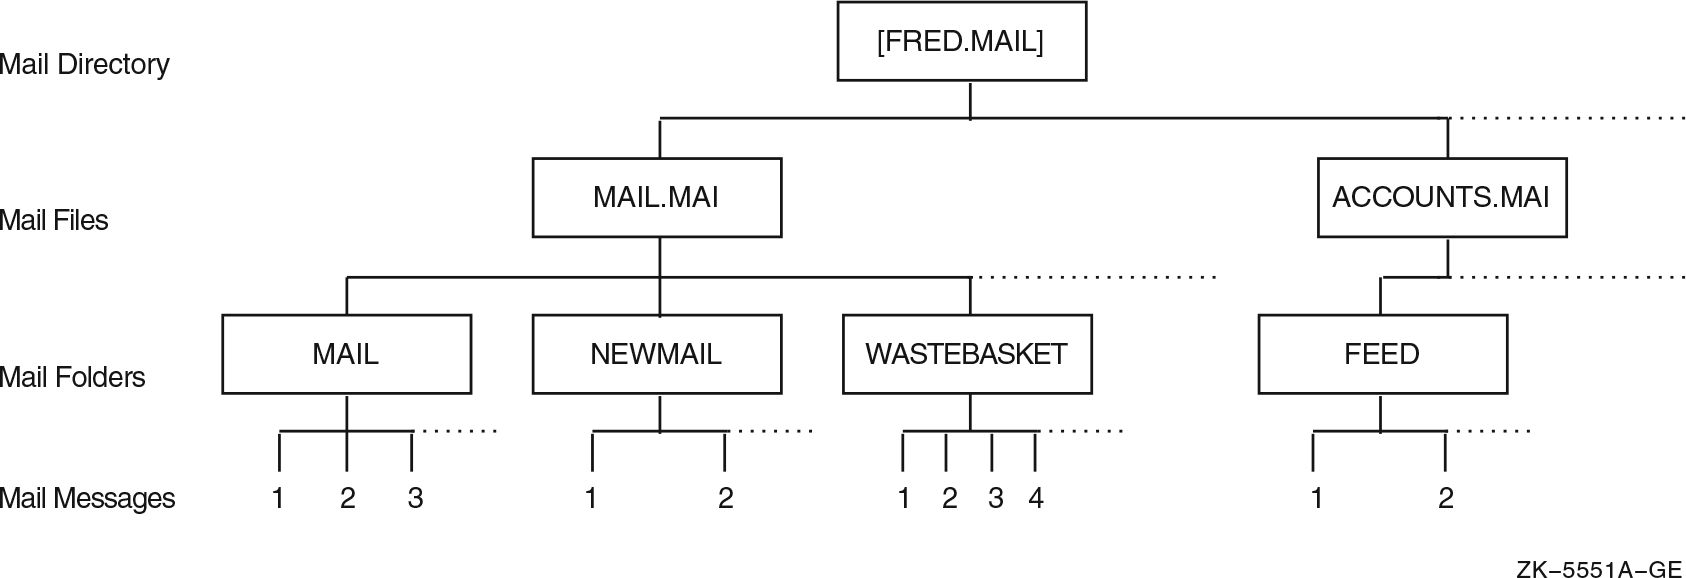 Organizing Mail